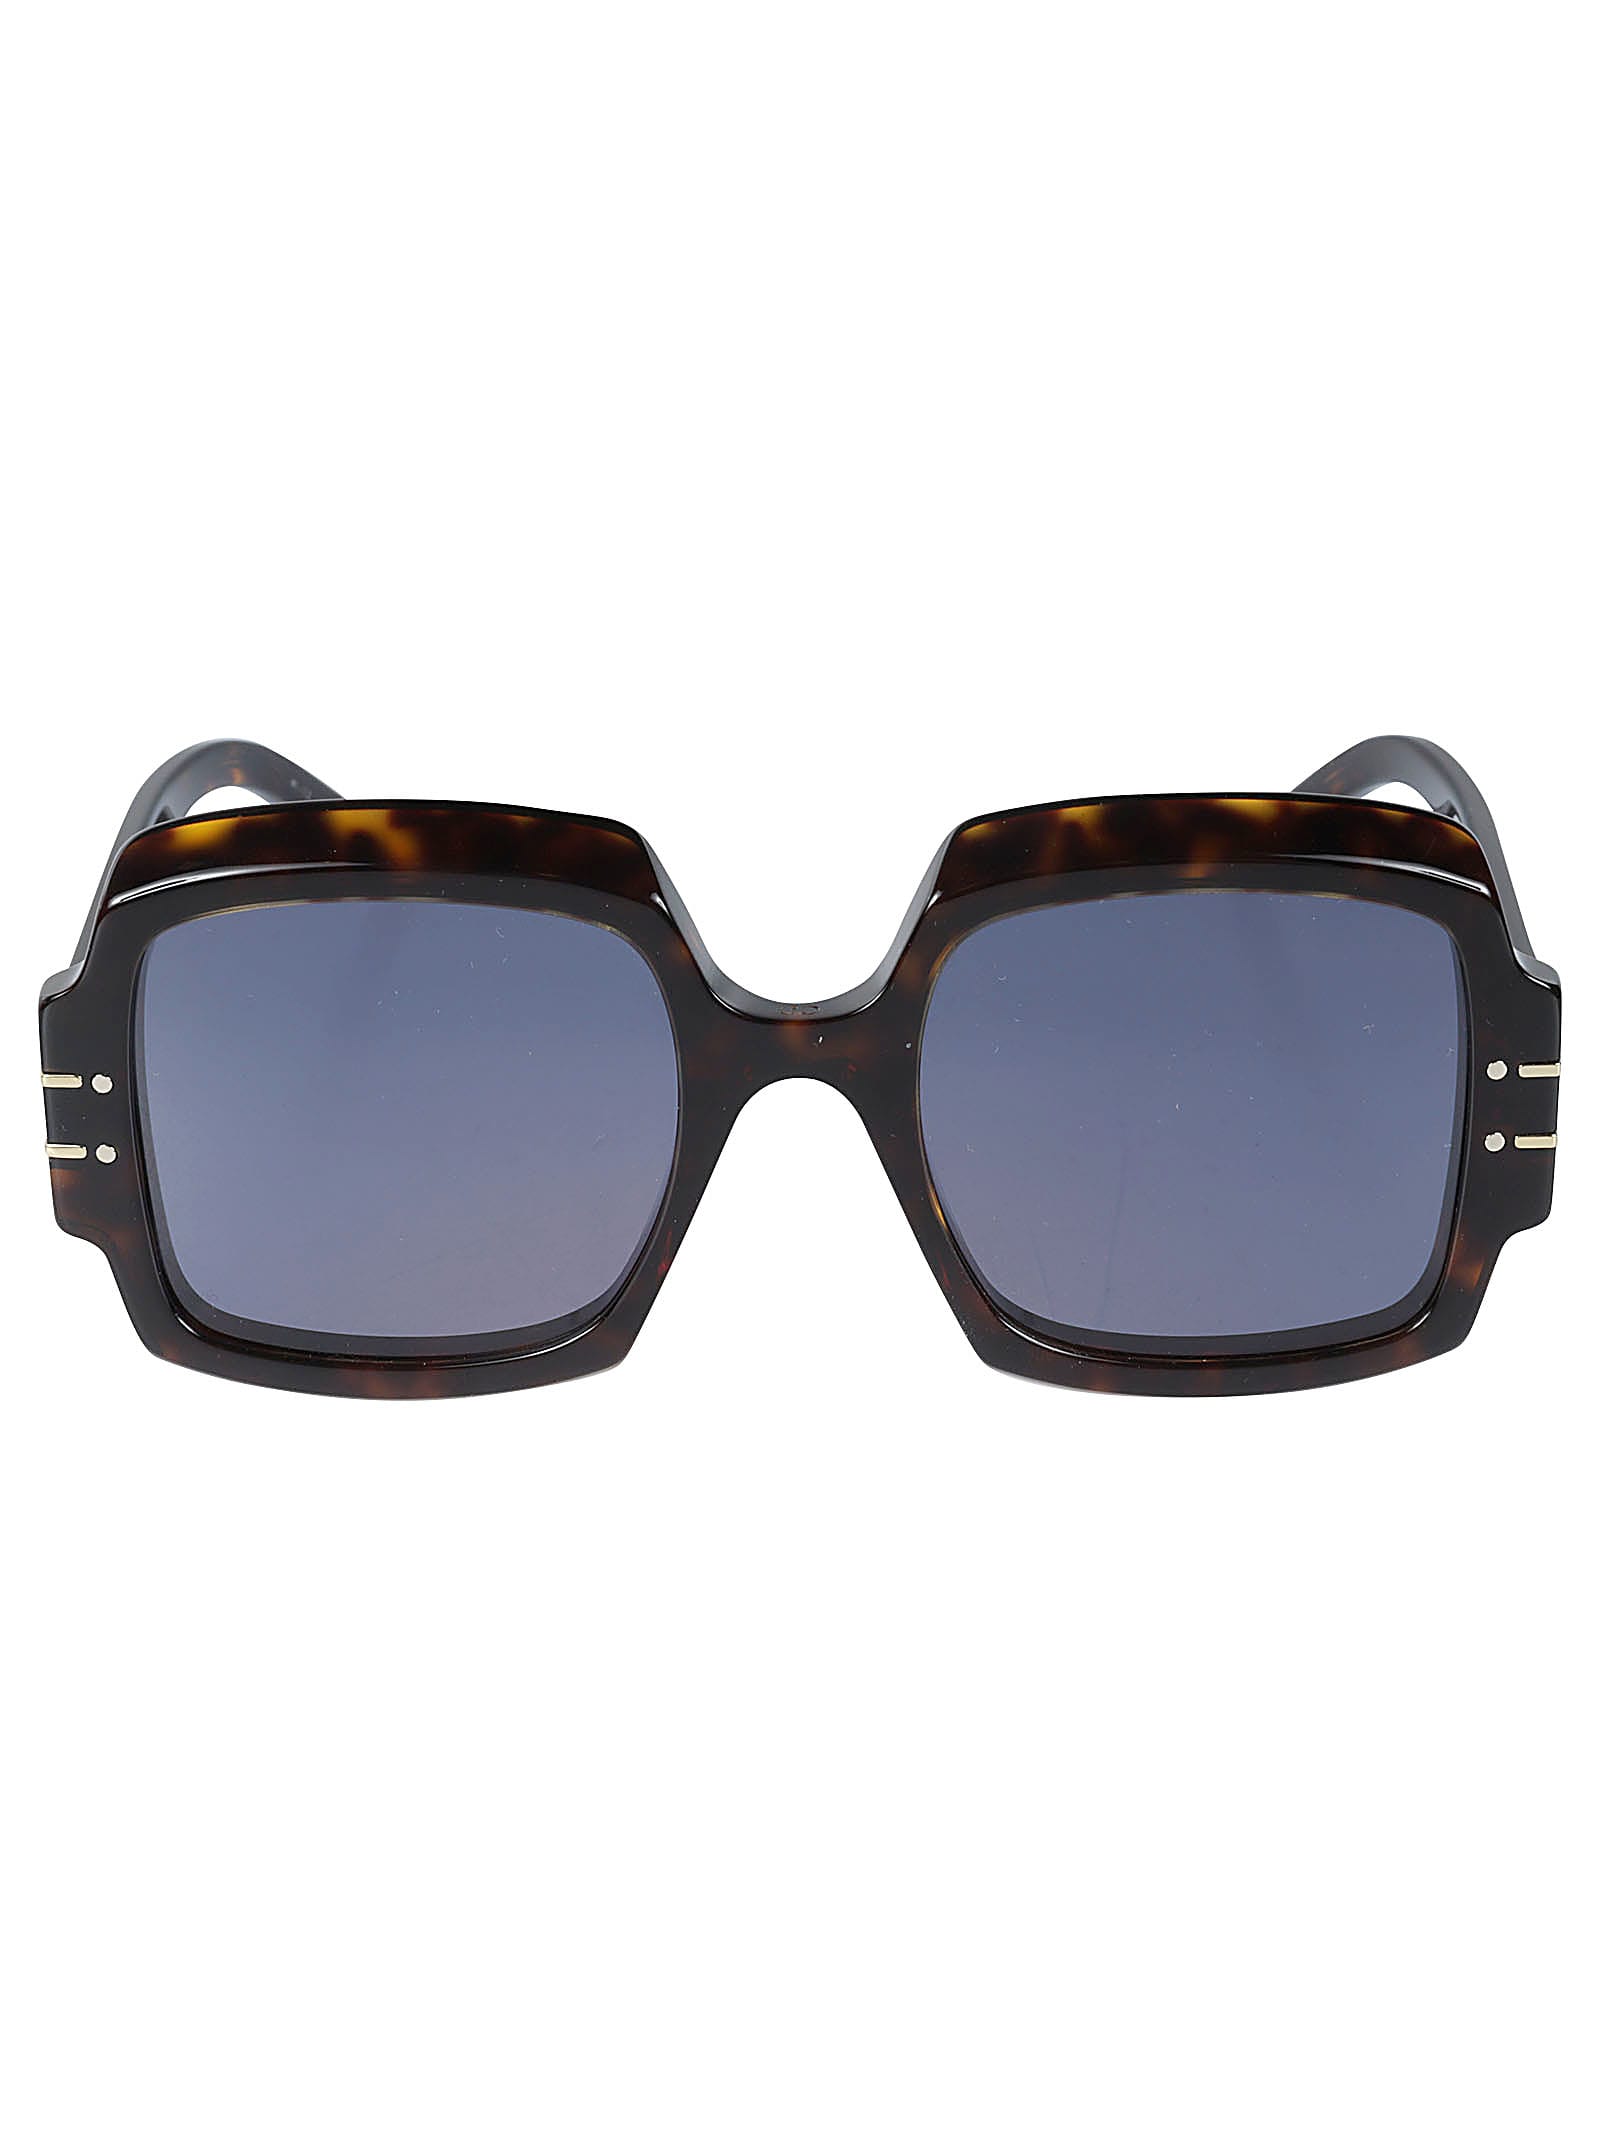 Christian Dior Square Sunglasses